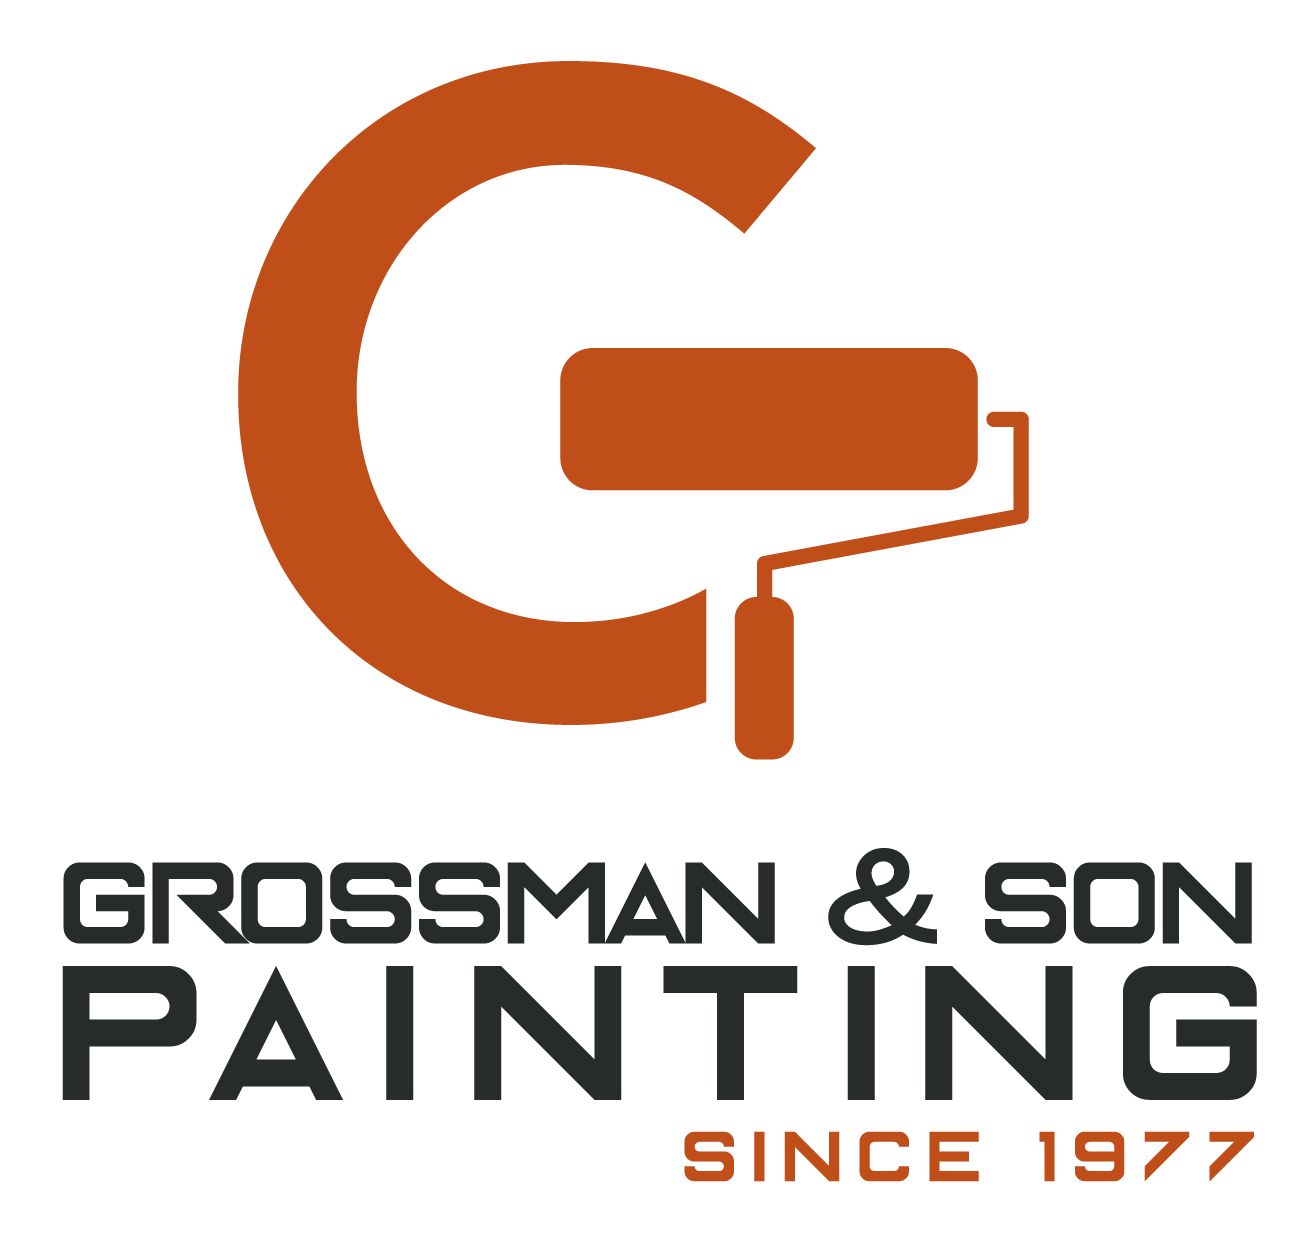 Grossman & Son Painting Logo